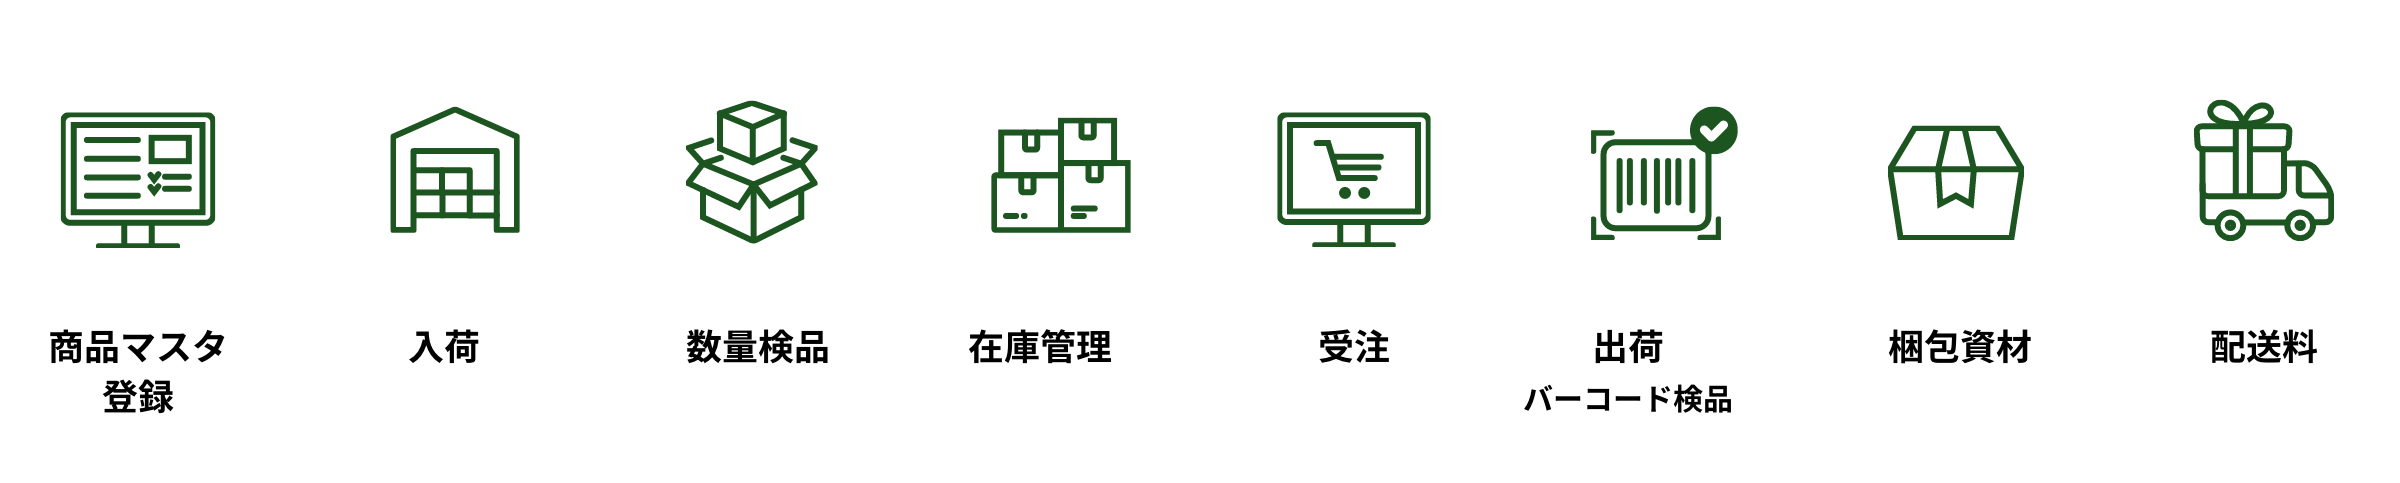 商品マスタ登録→入荷→数量検品→在庫管理→受注→出荷・バーコード検品→梱包資材→配送料